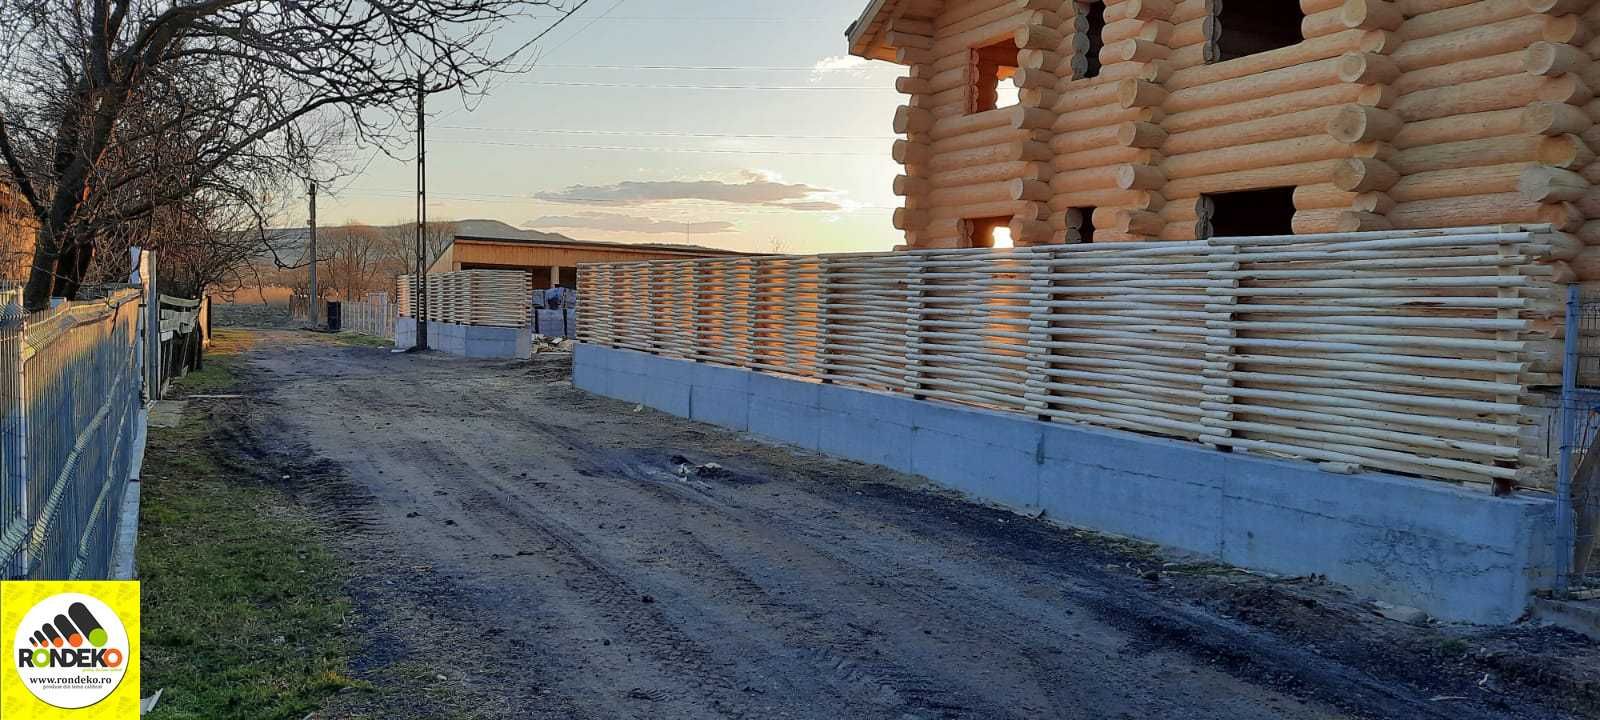 Gard din Lemn Rotund Impletit - Montaj si Transport Asigurat!